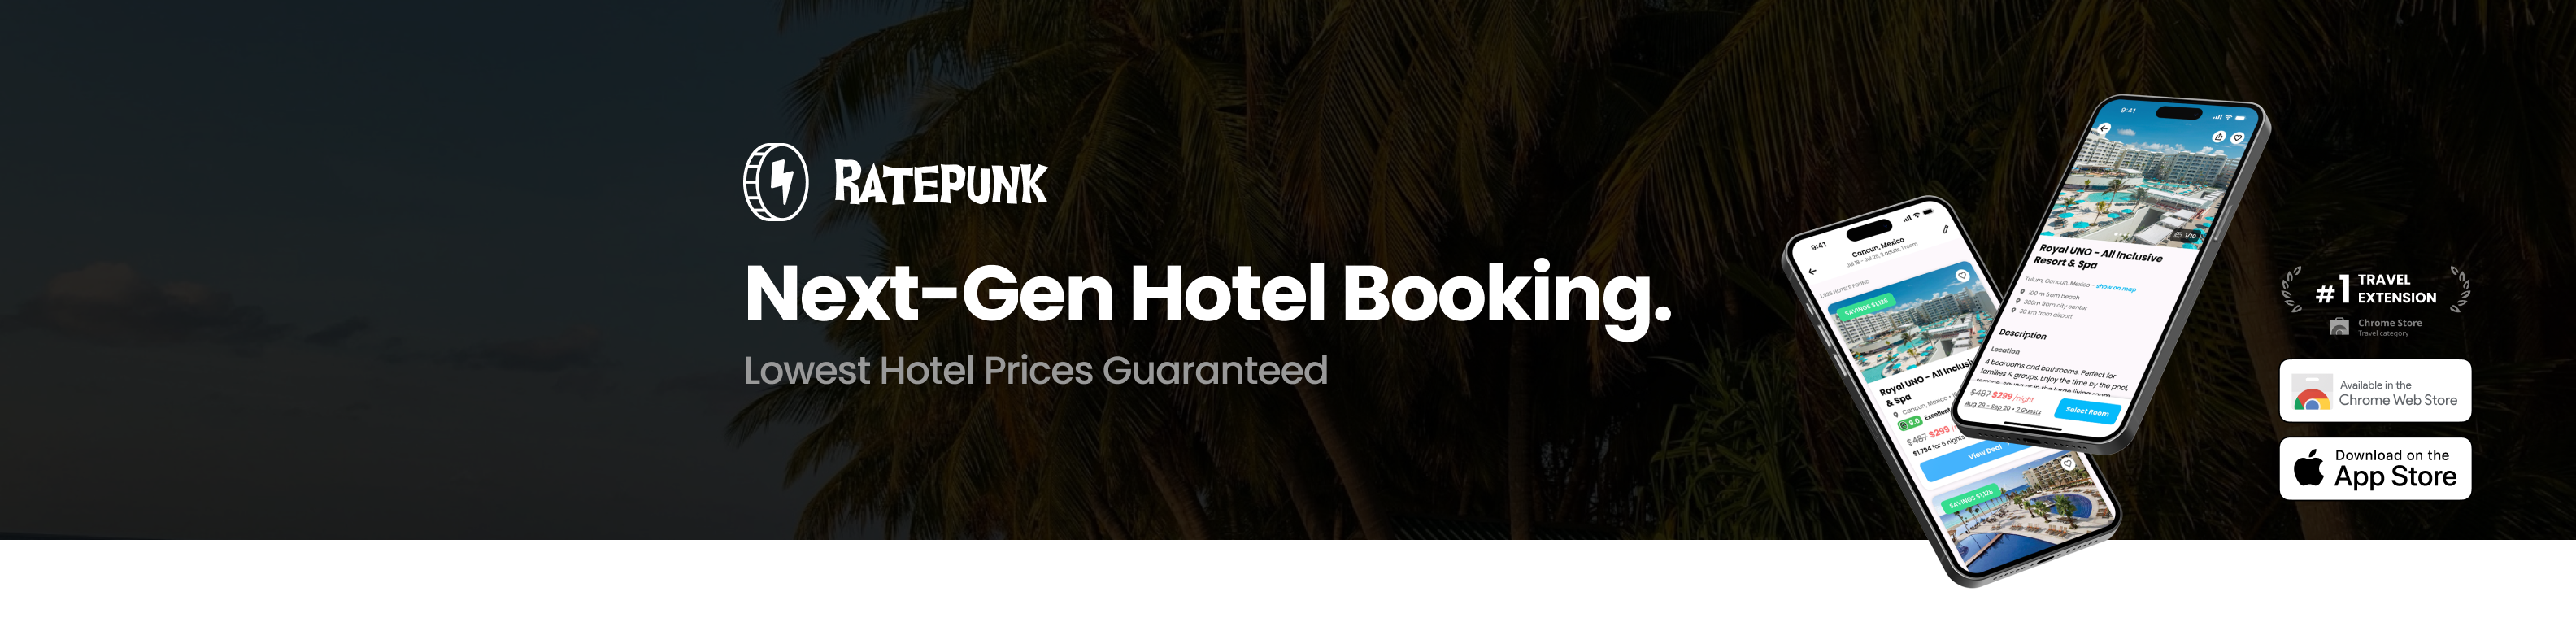 ratepunk hotel price comparison- next gen tool for travel